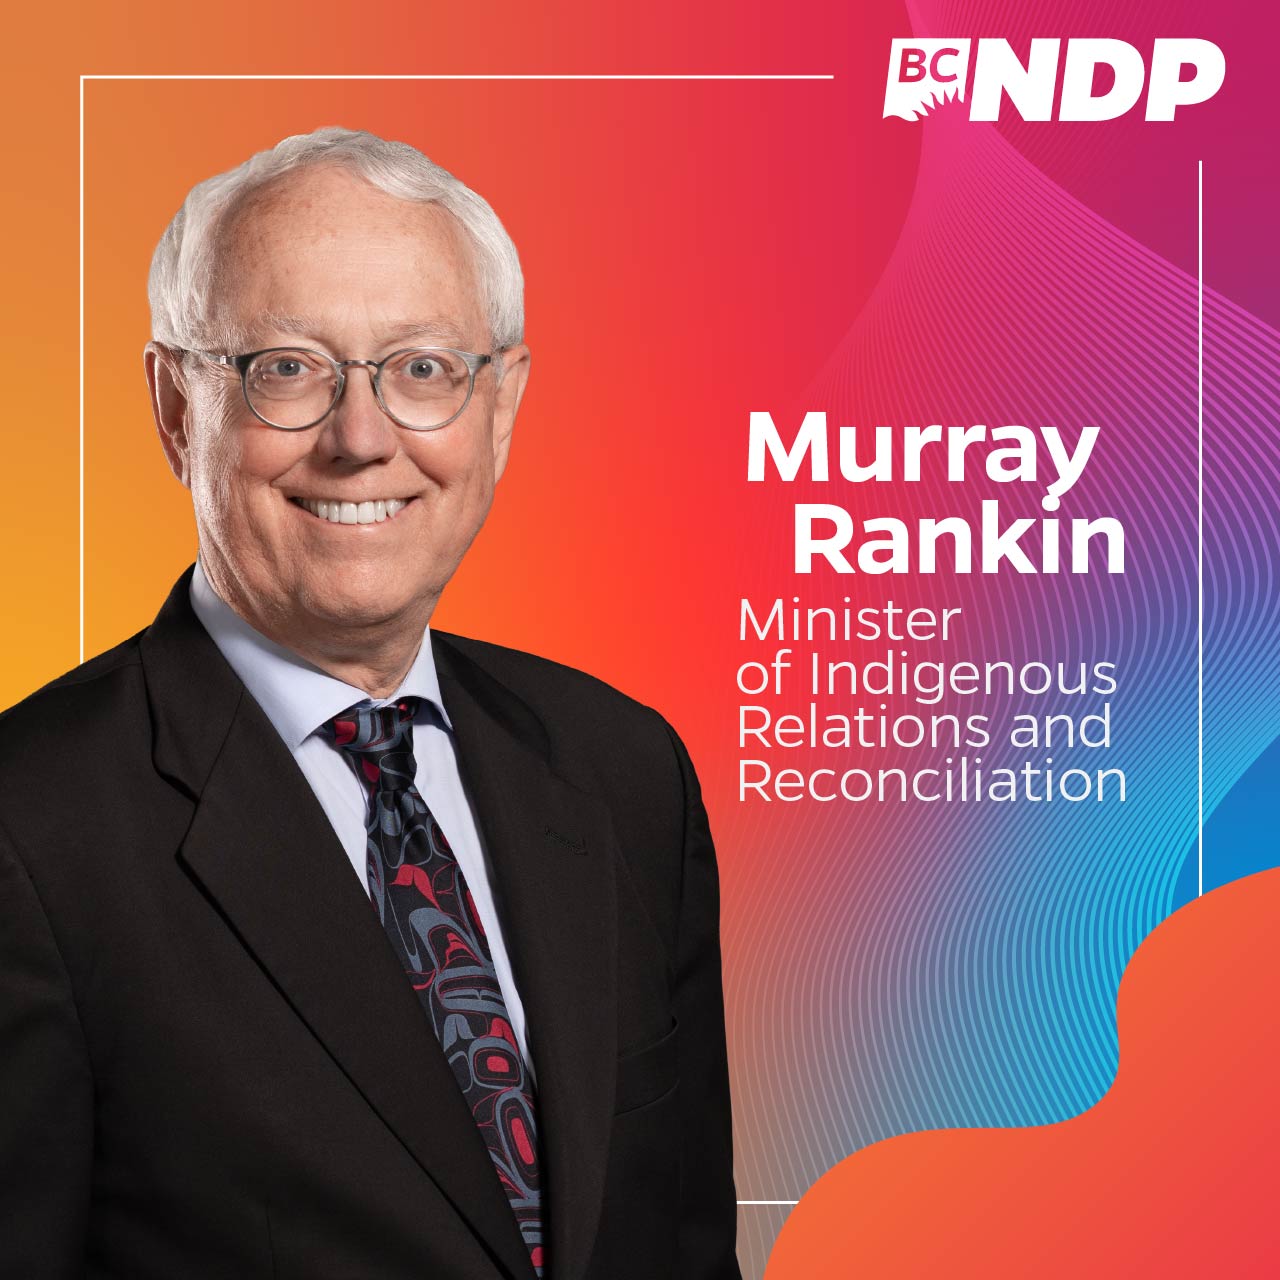 Murray Rankin